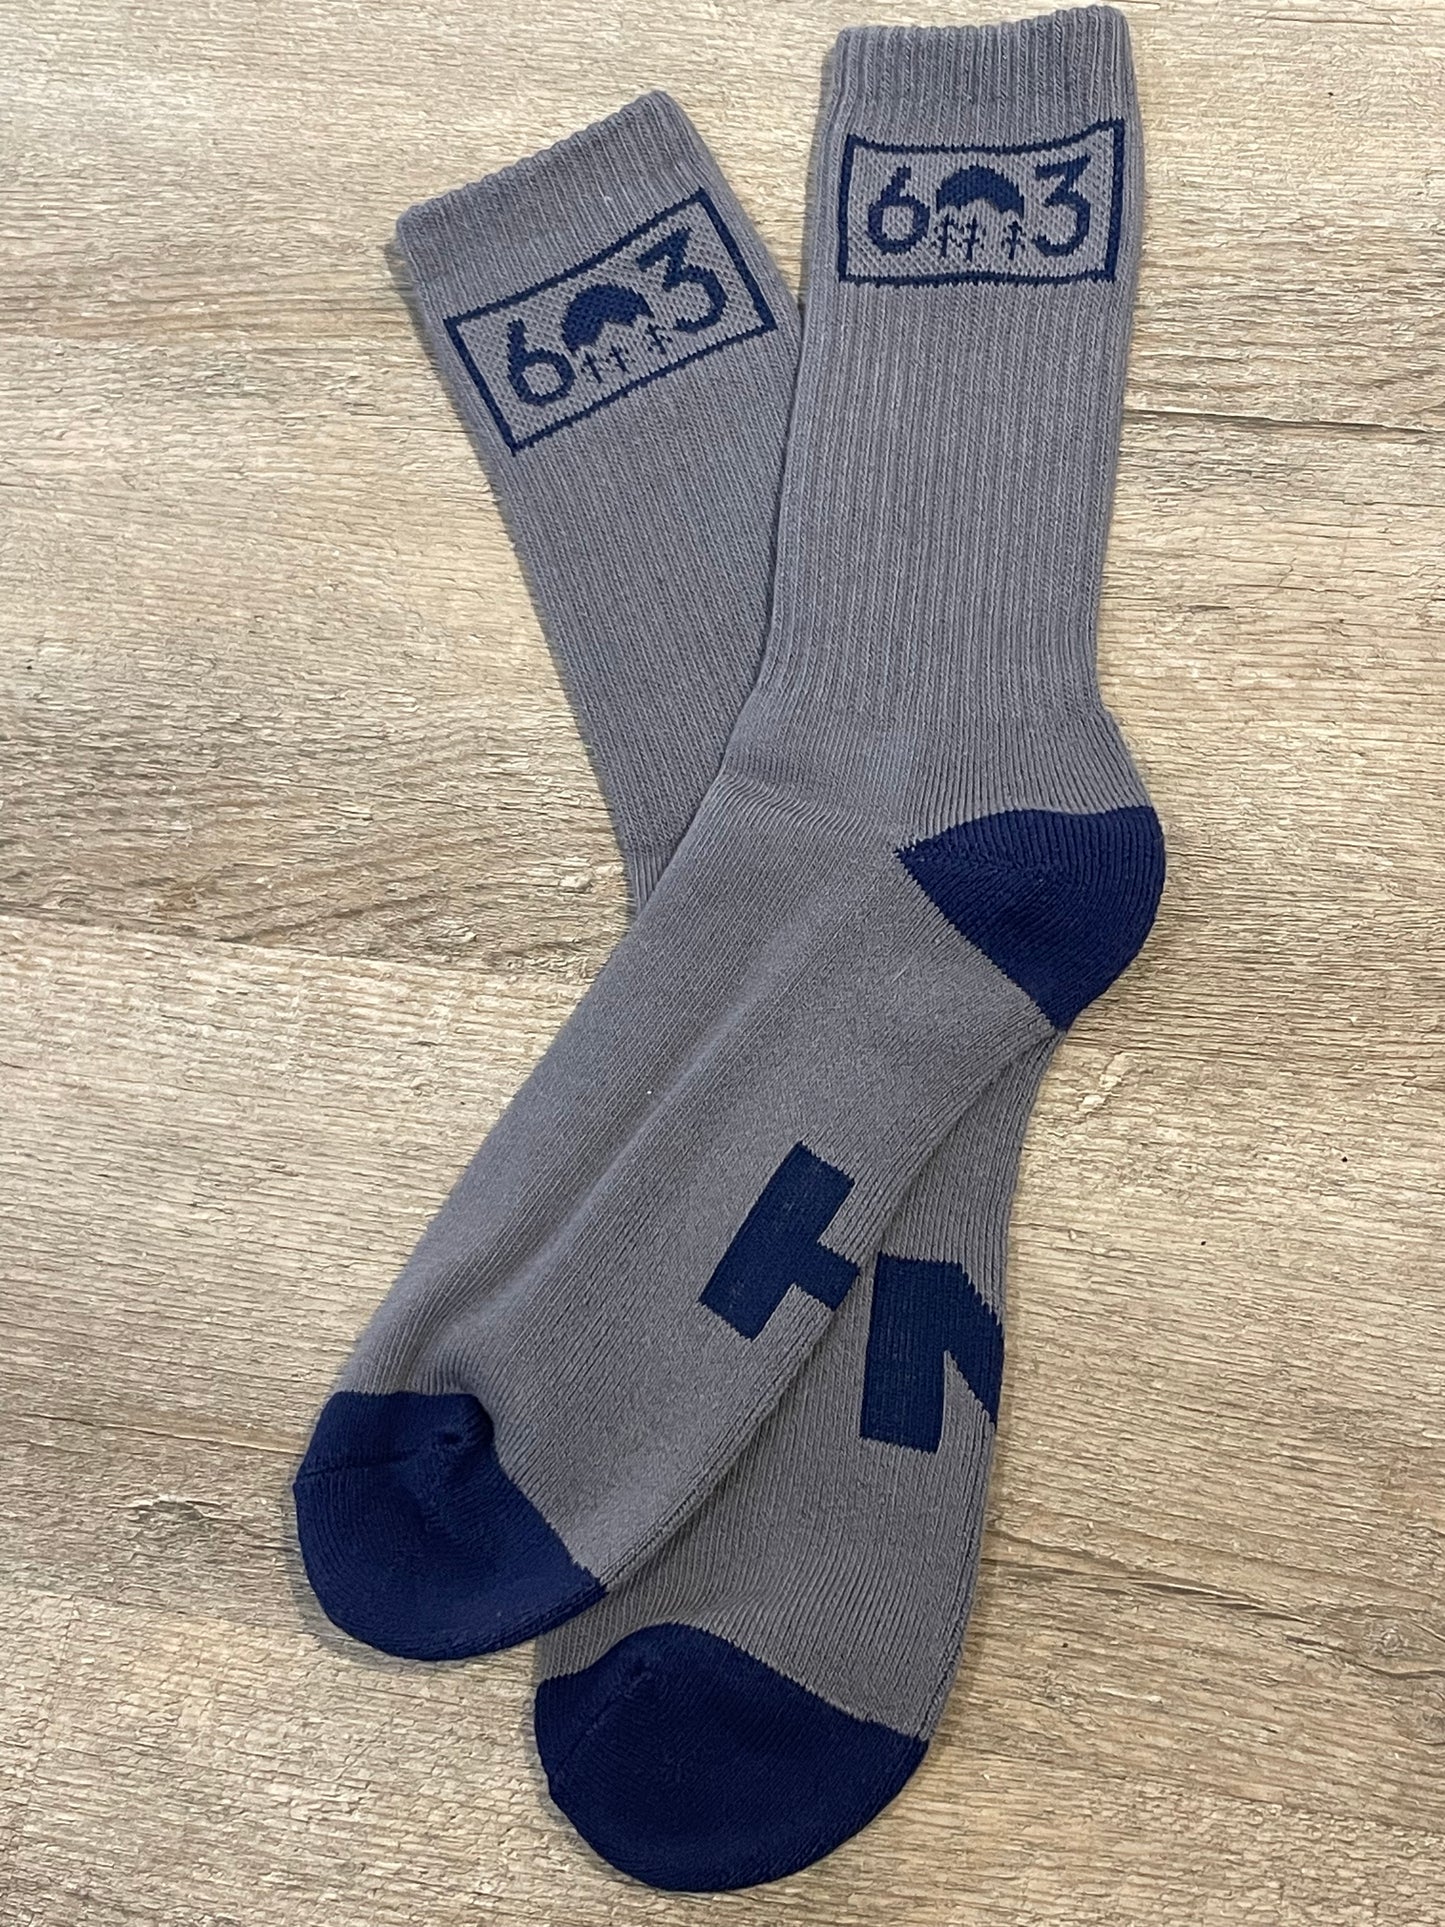 New Hampshire Apparel Socks